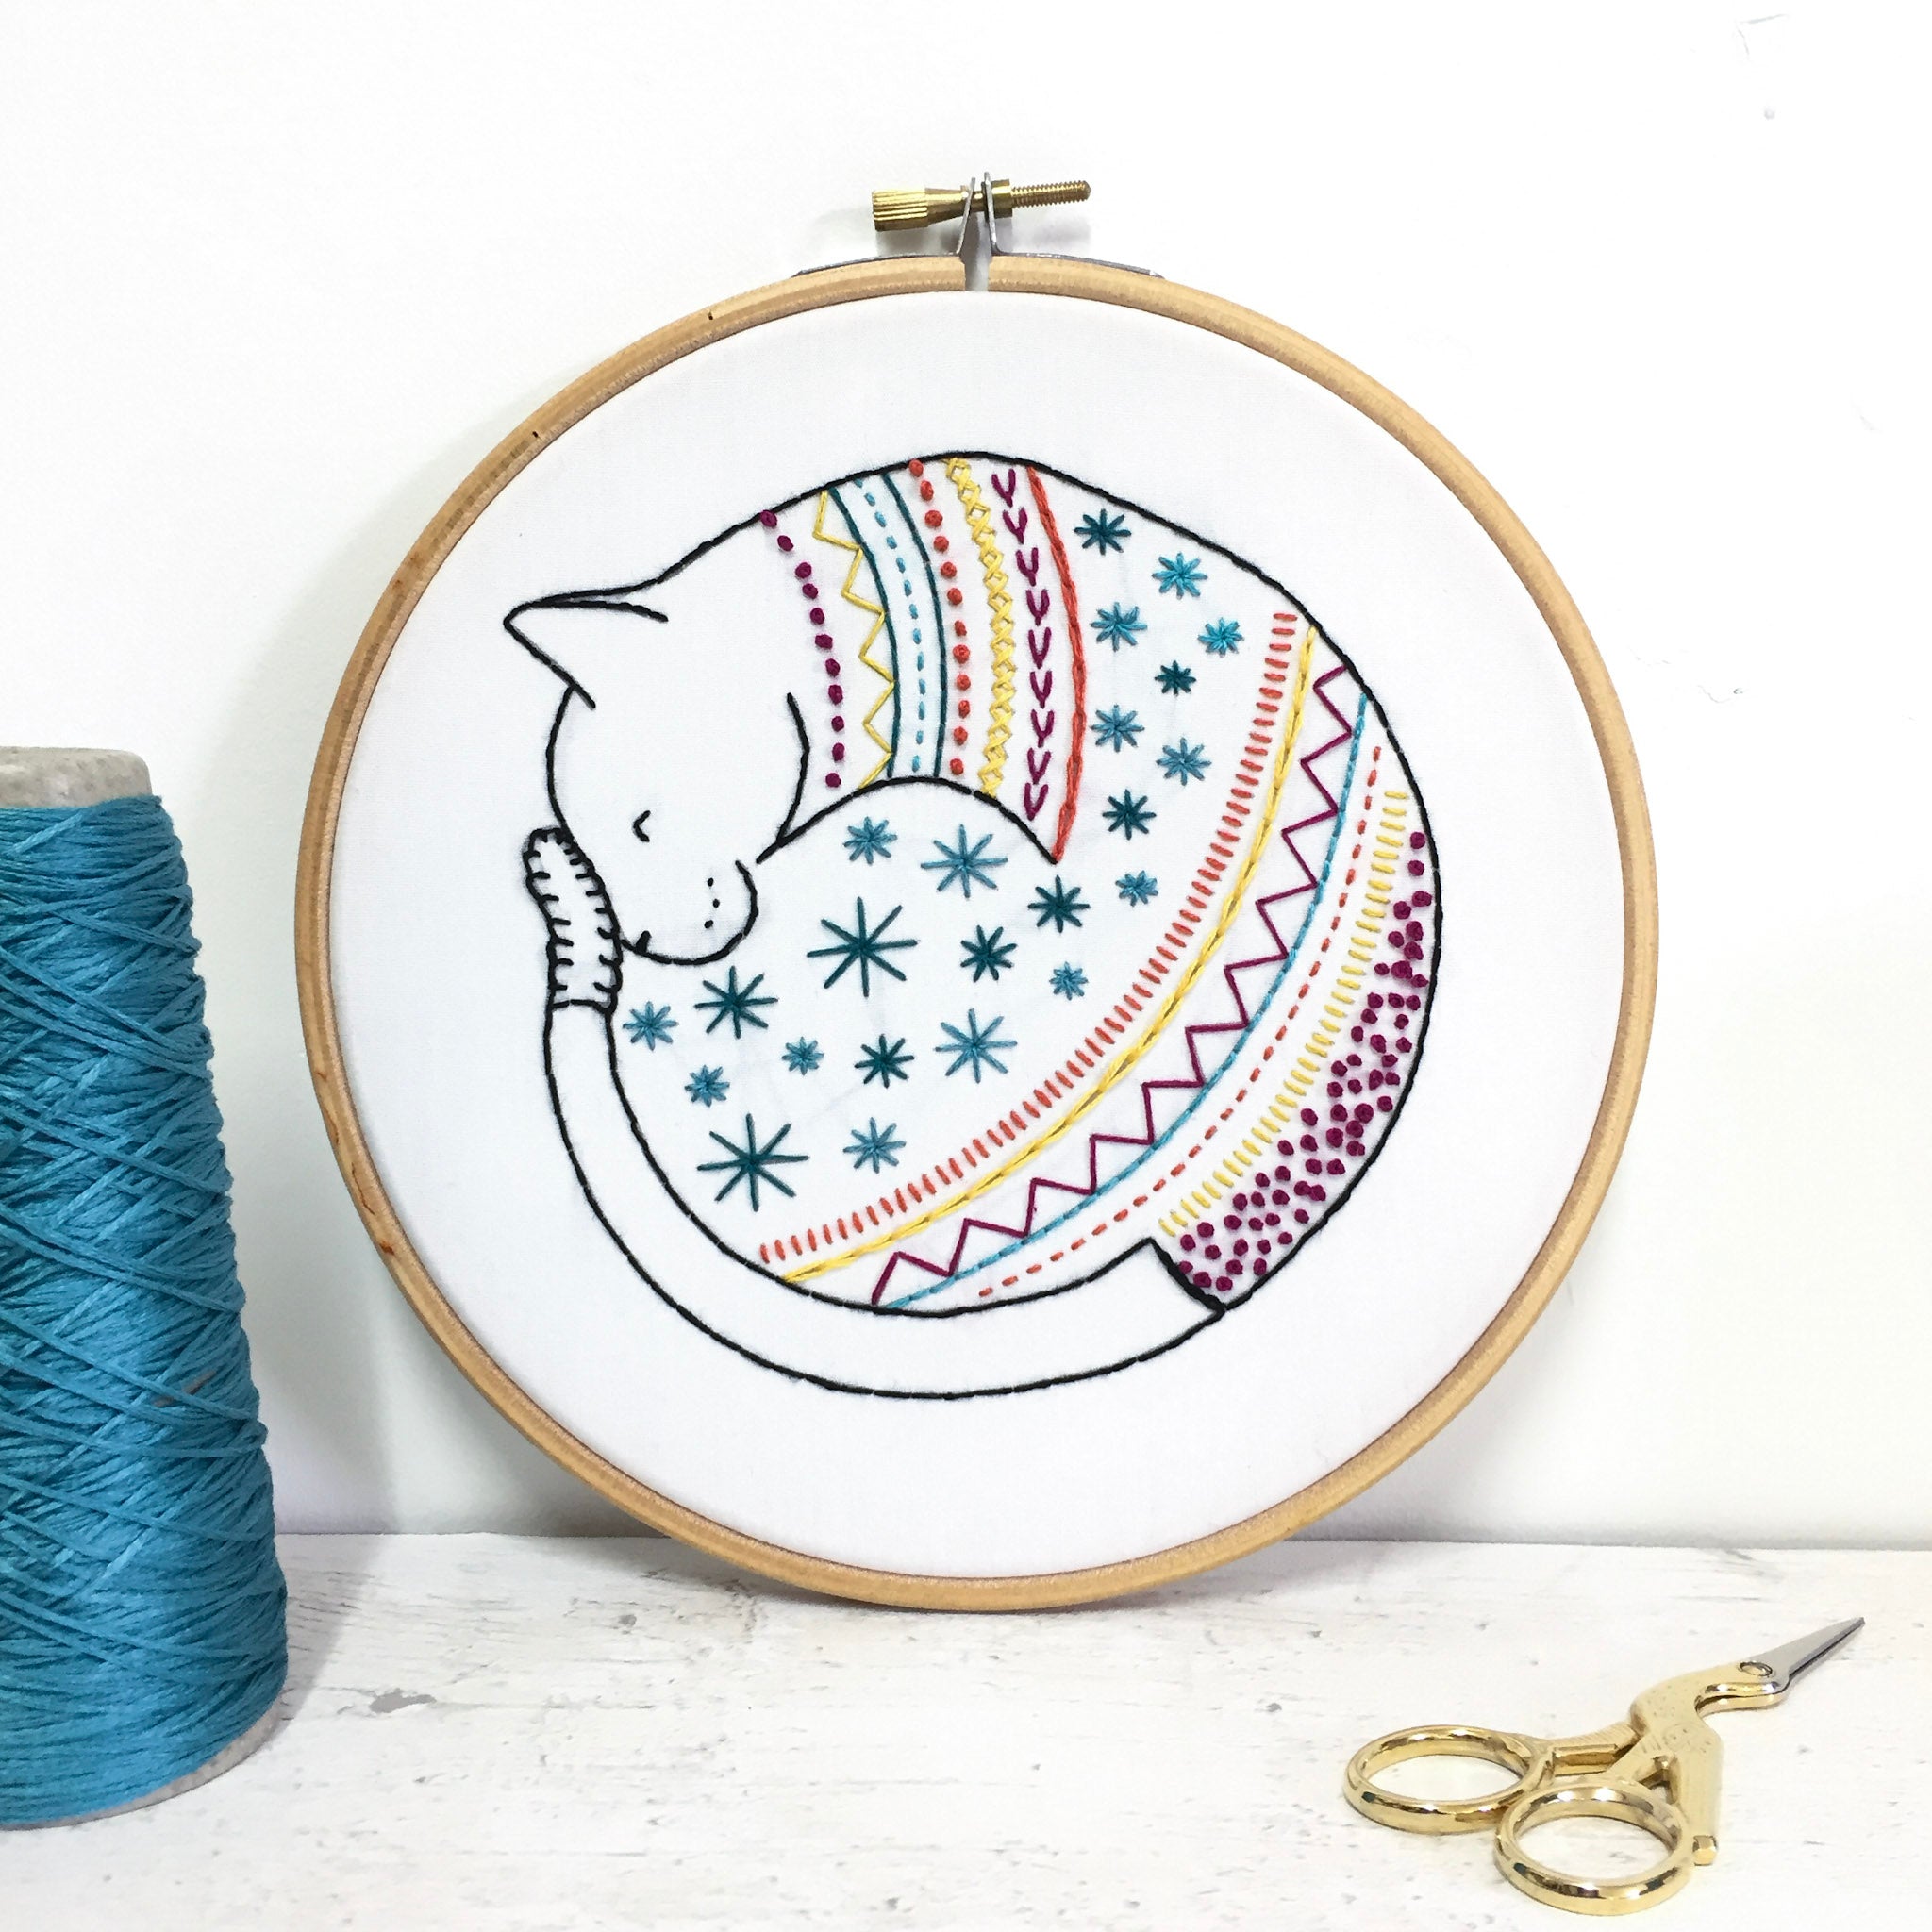 Cat Embroidery Kit, Hawthorn Handmade